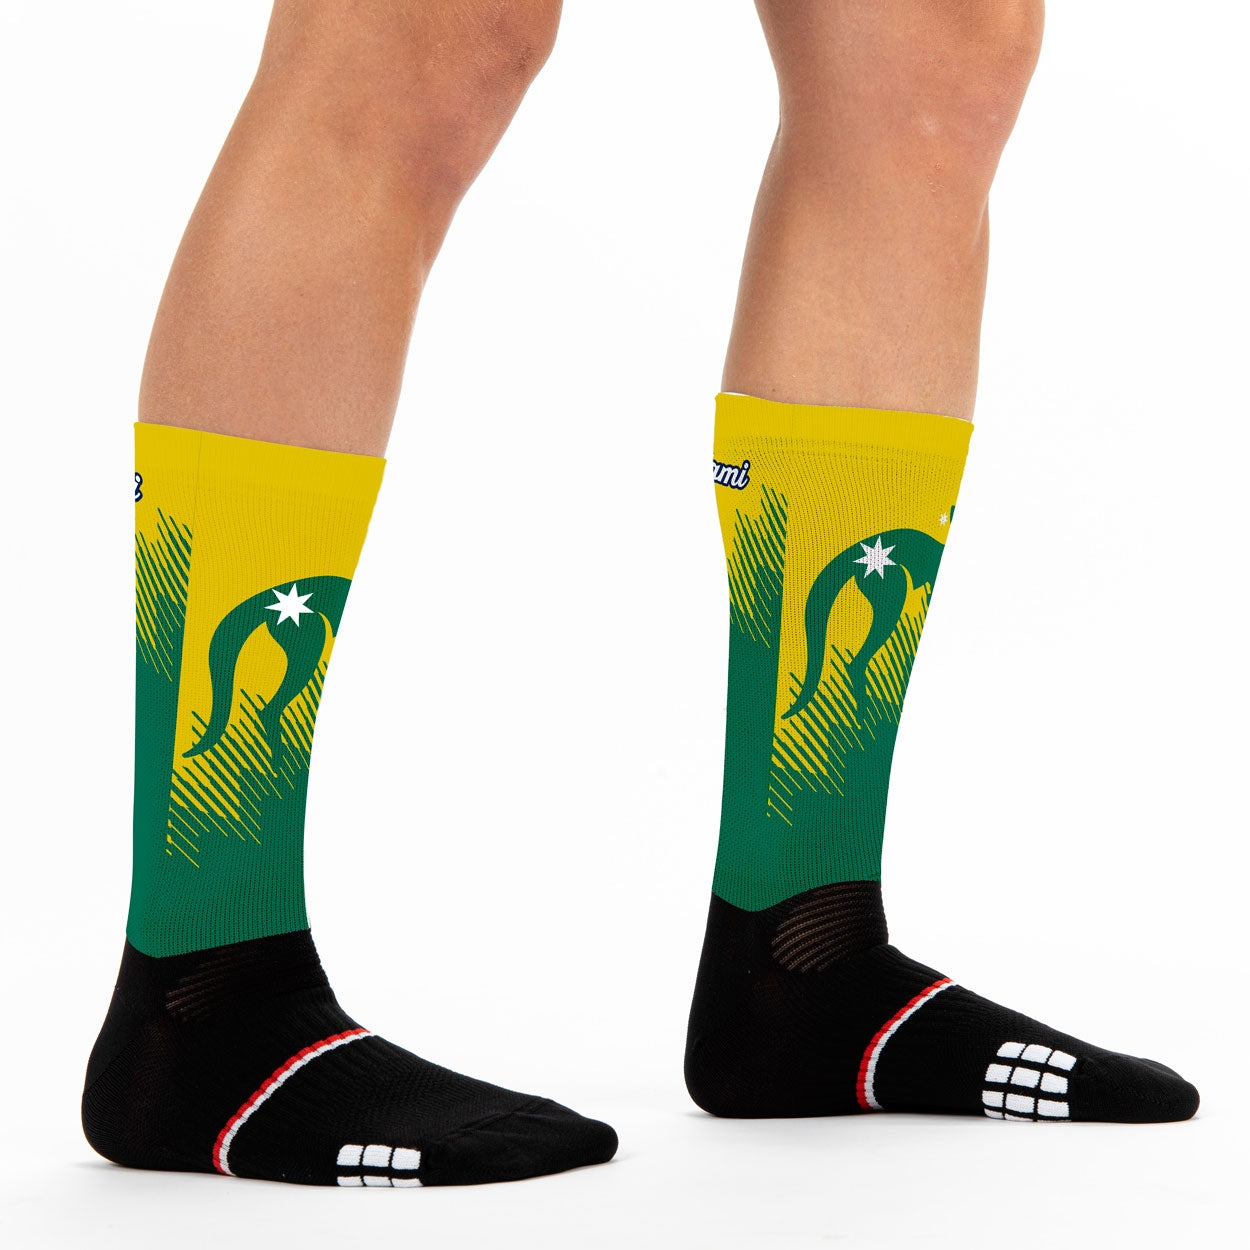 socks_sports_running_cycling_original_colorful_nation_australia_made_in_france_kiwami_sports